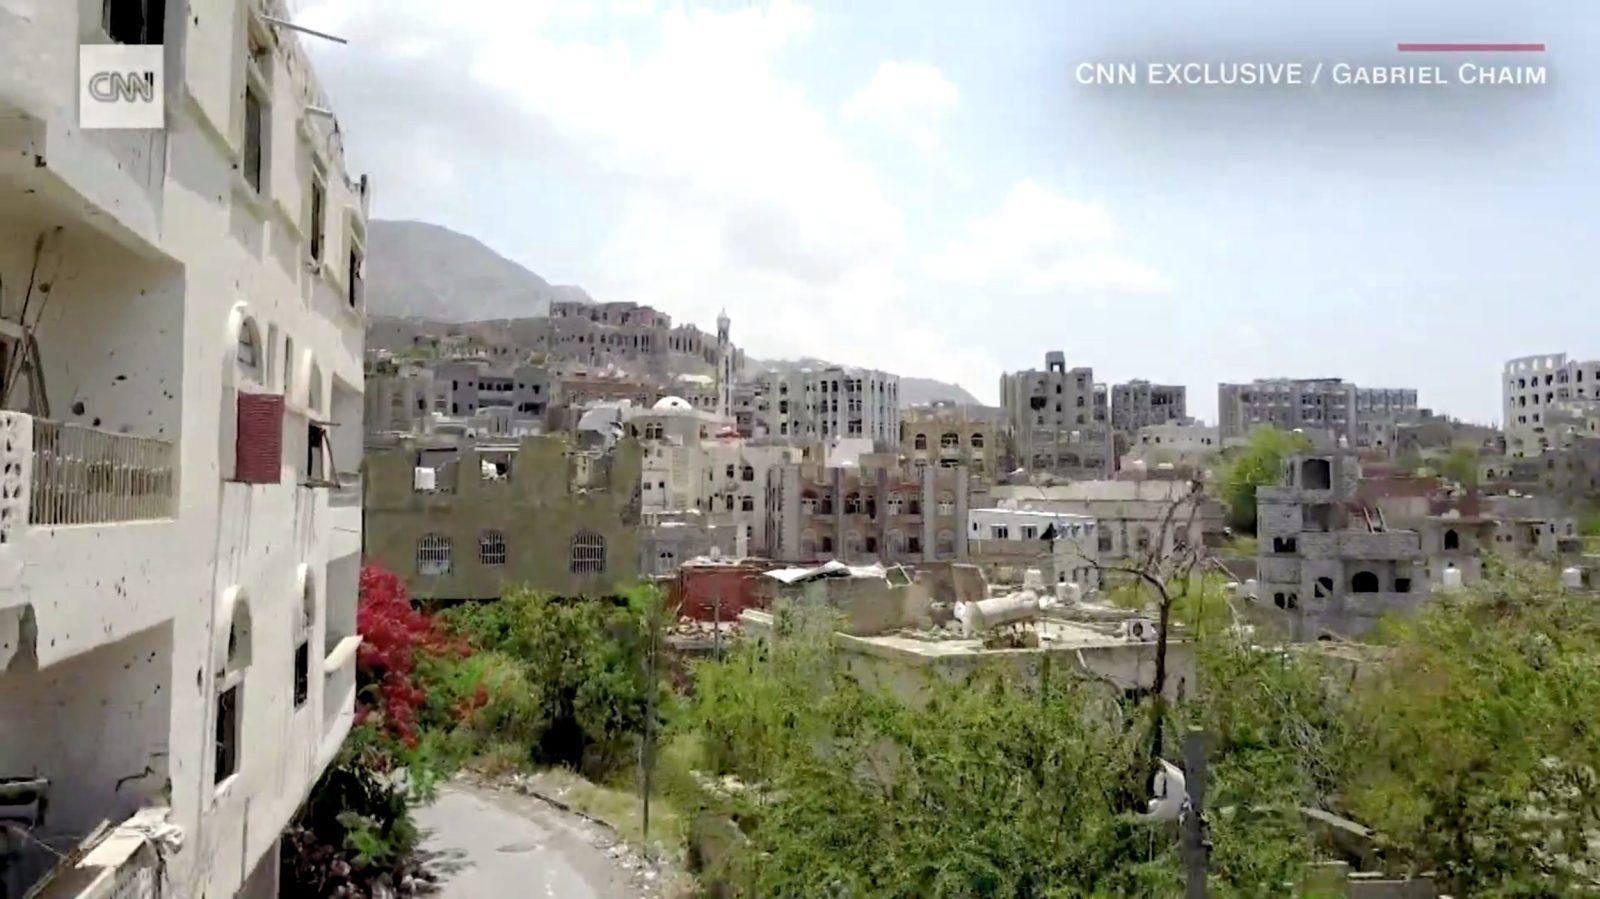 Drone footage shows Yemen's city of Taiz in ruins